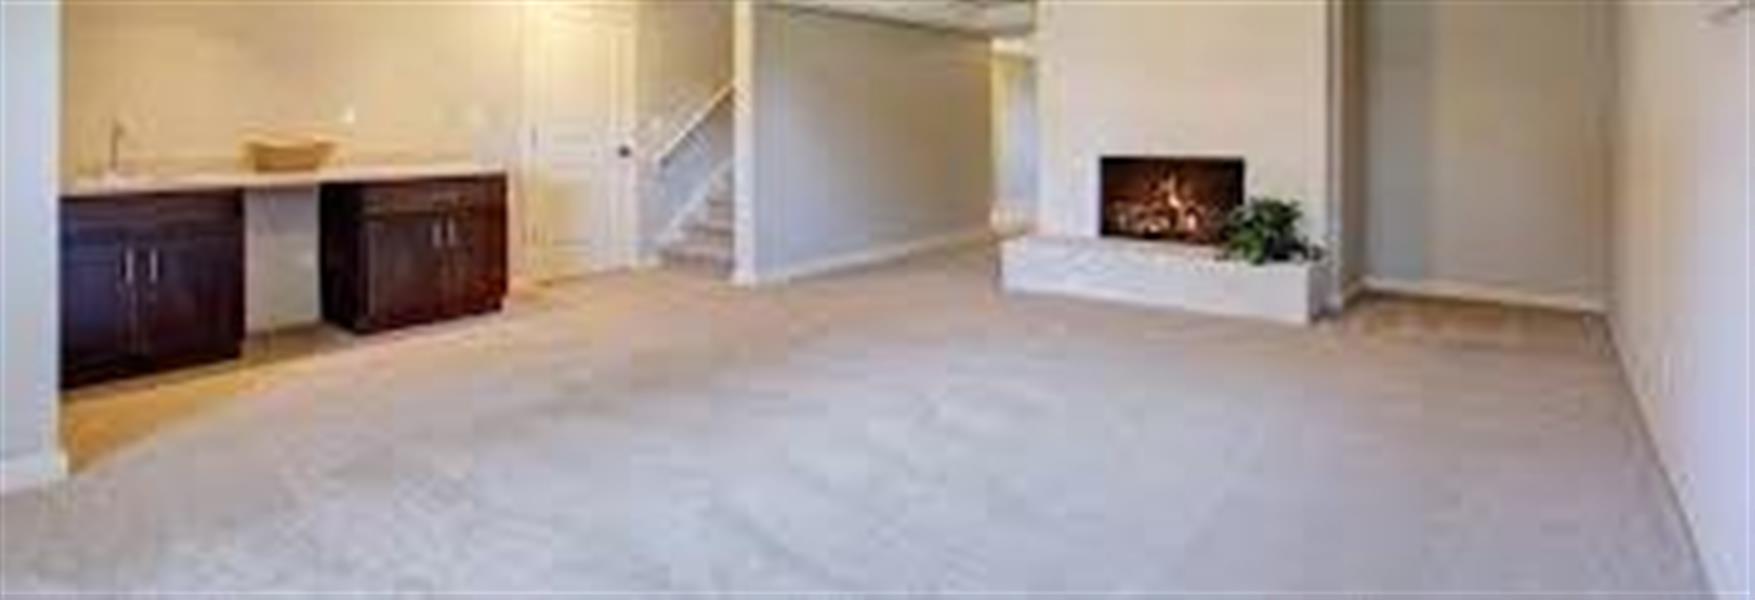 2390051b-4efd-404c-b700-c295700f5622_Share Carpet Cleaning.jpg